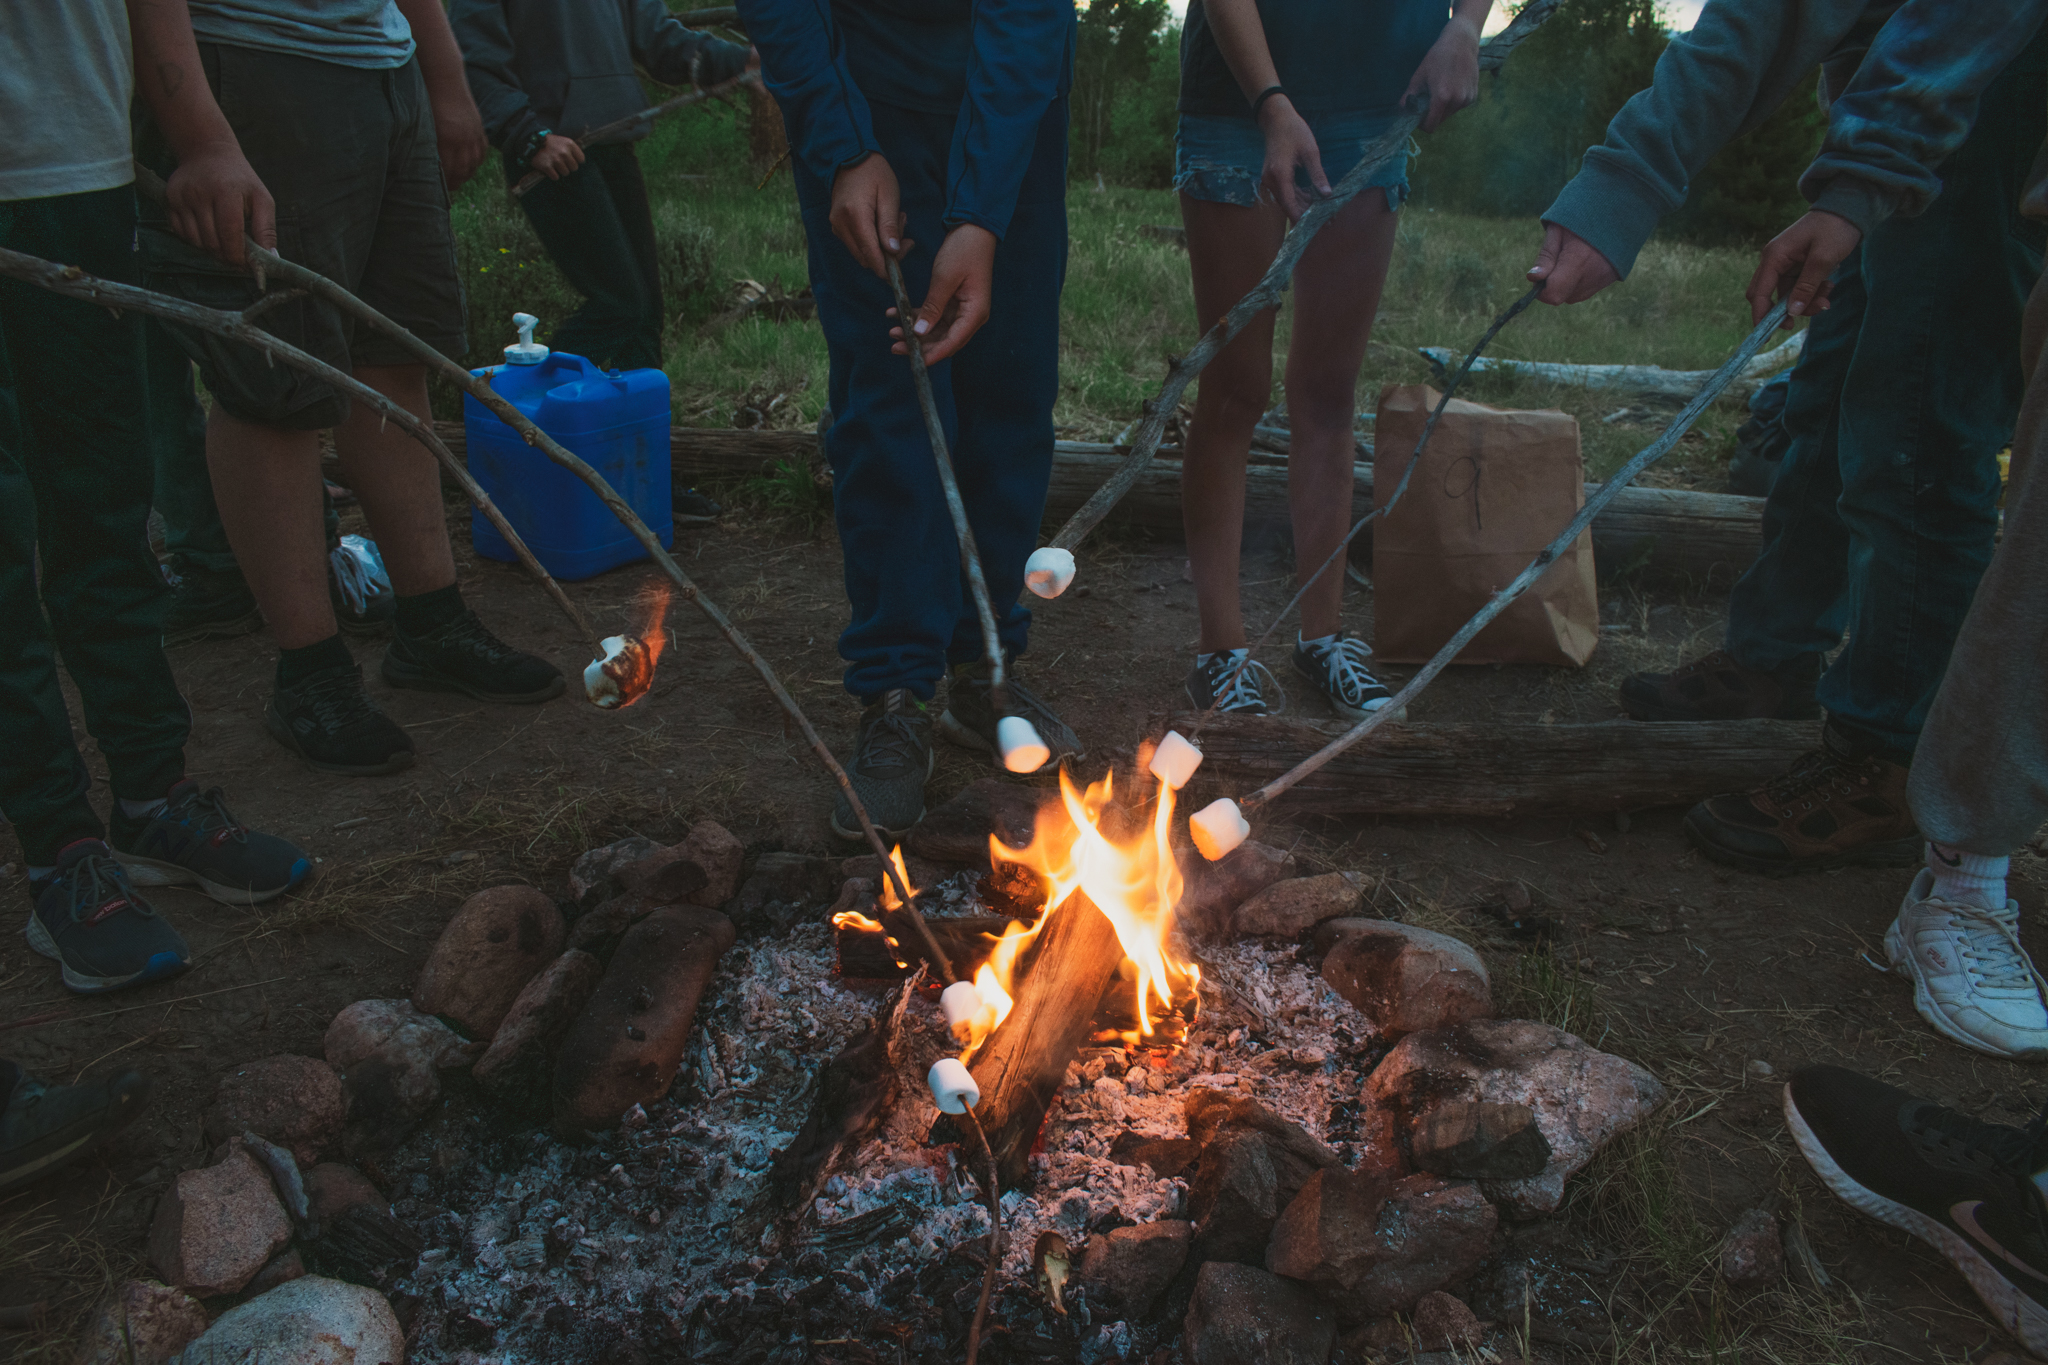 group roasting marshmallows